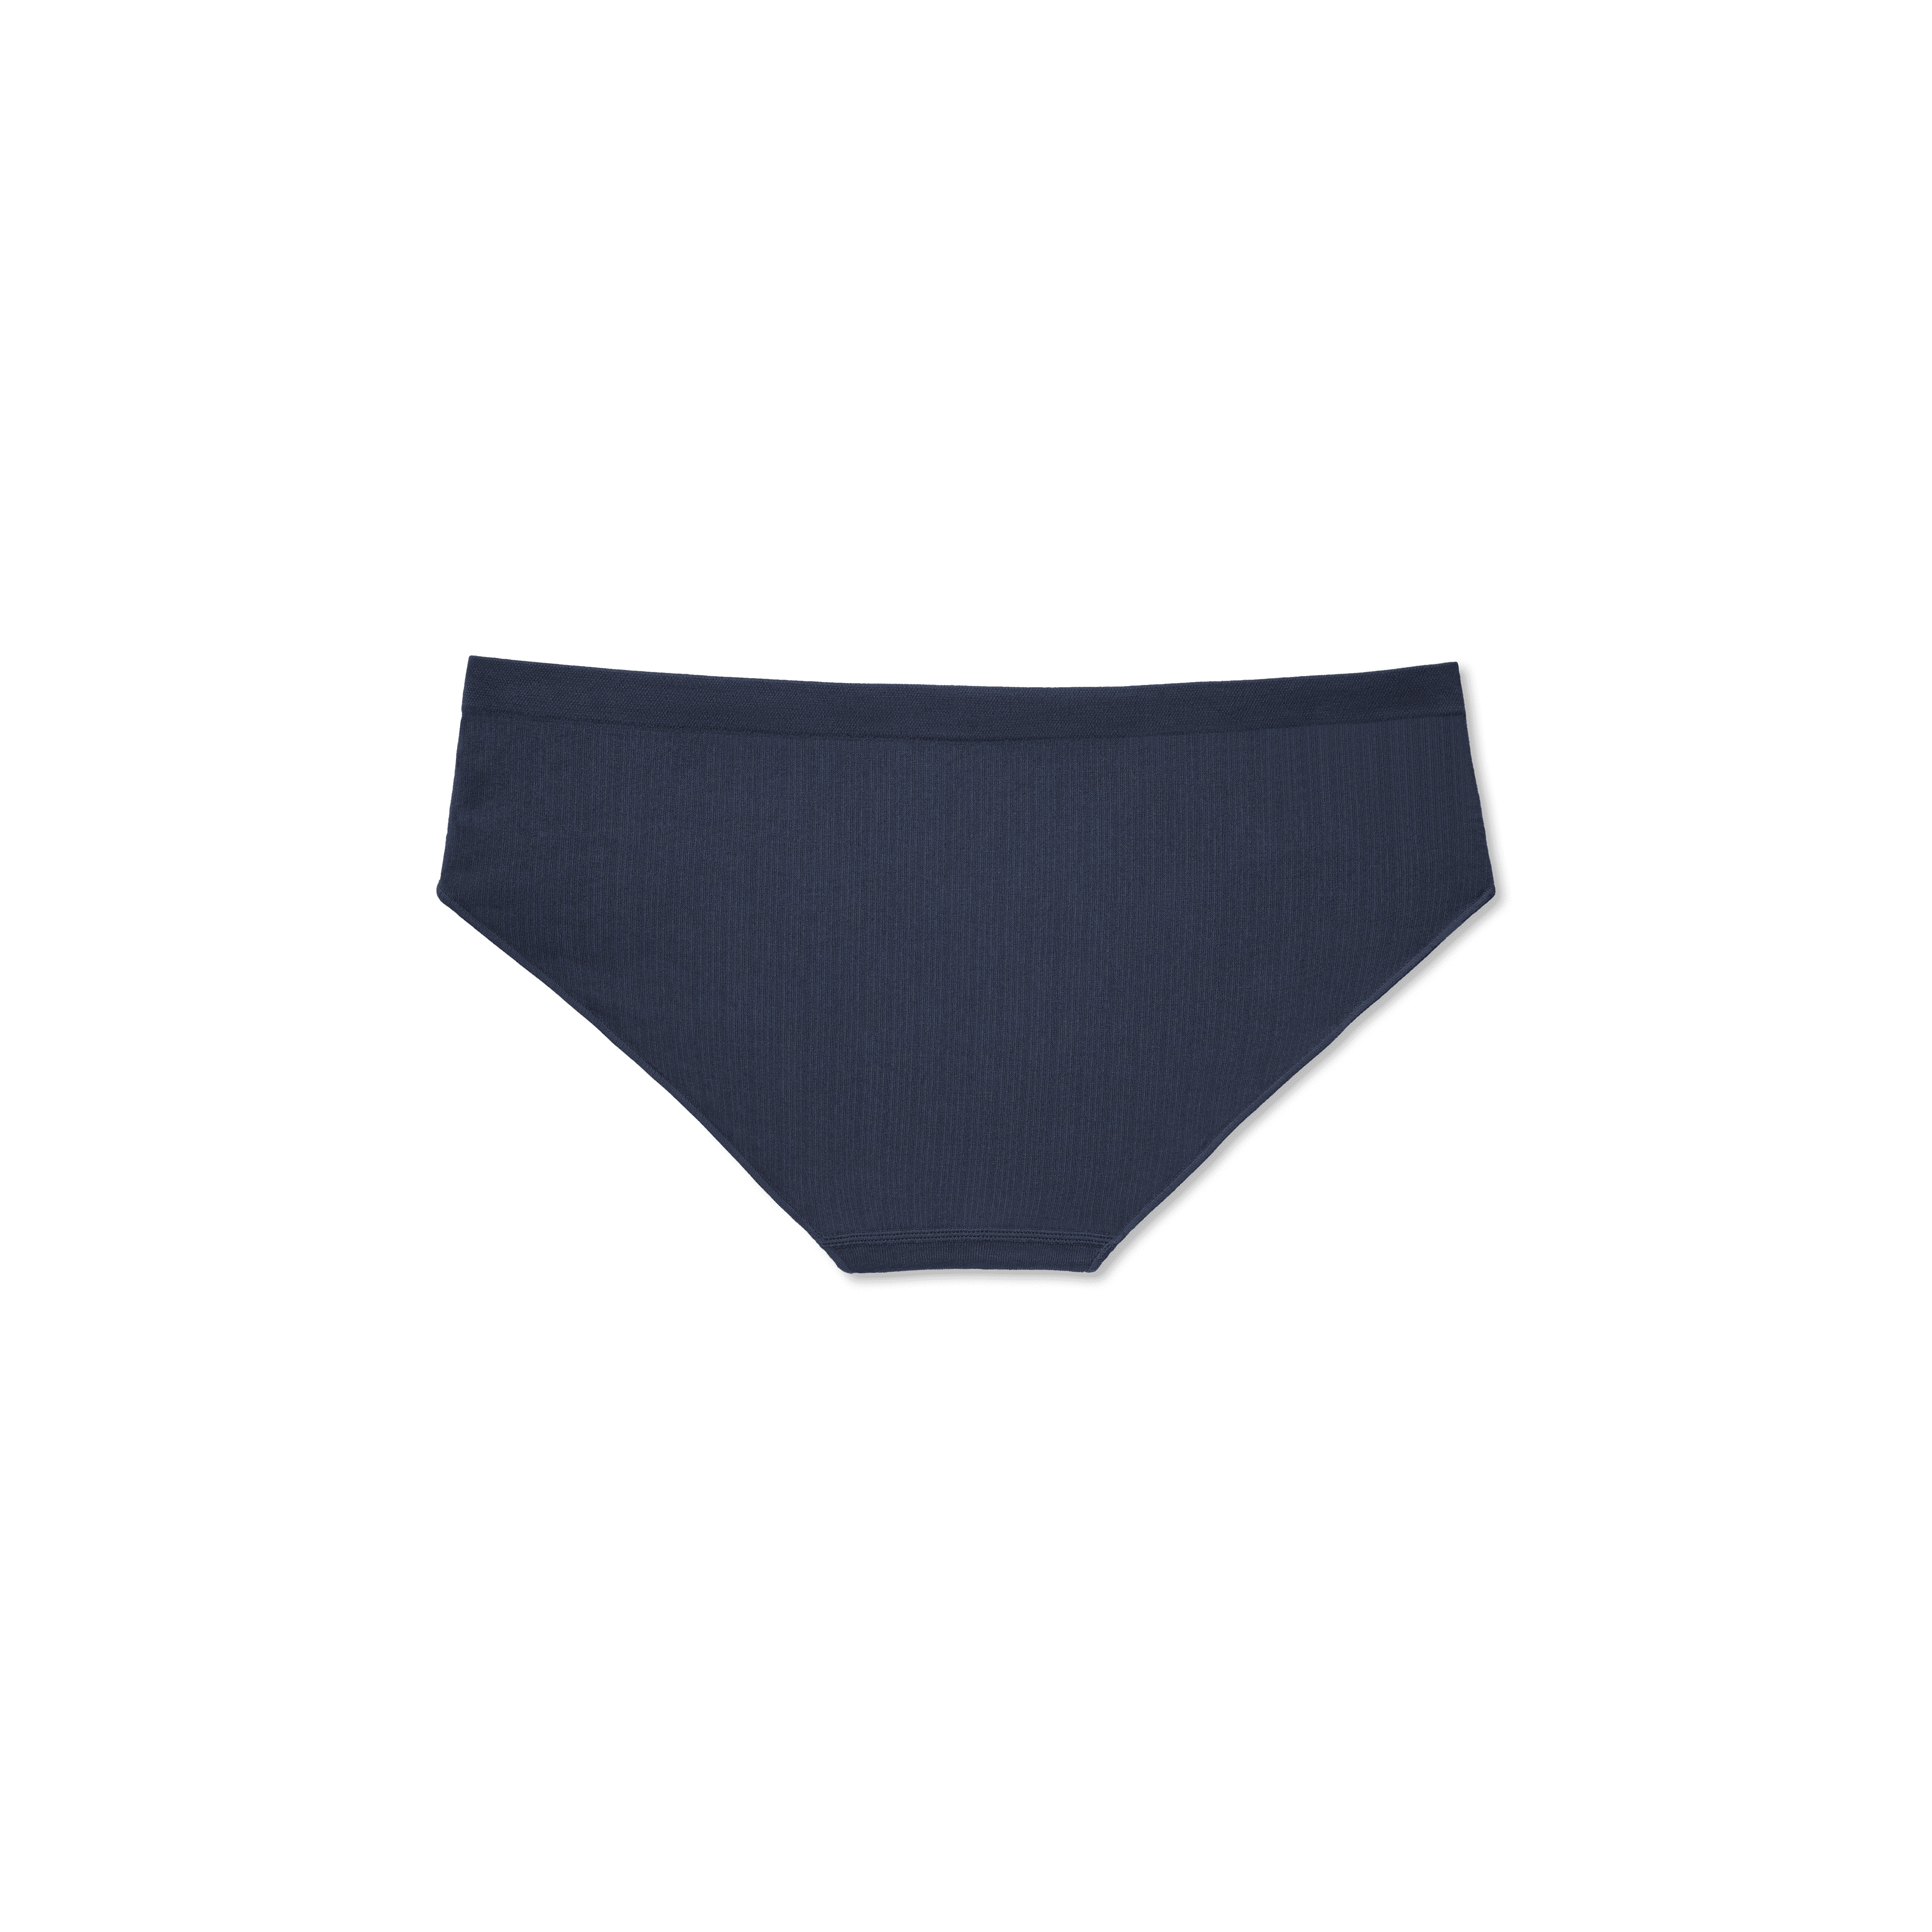 Viport Women's Breathable Seamless No Show Nylon Spandex Underwear